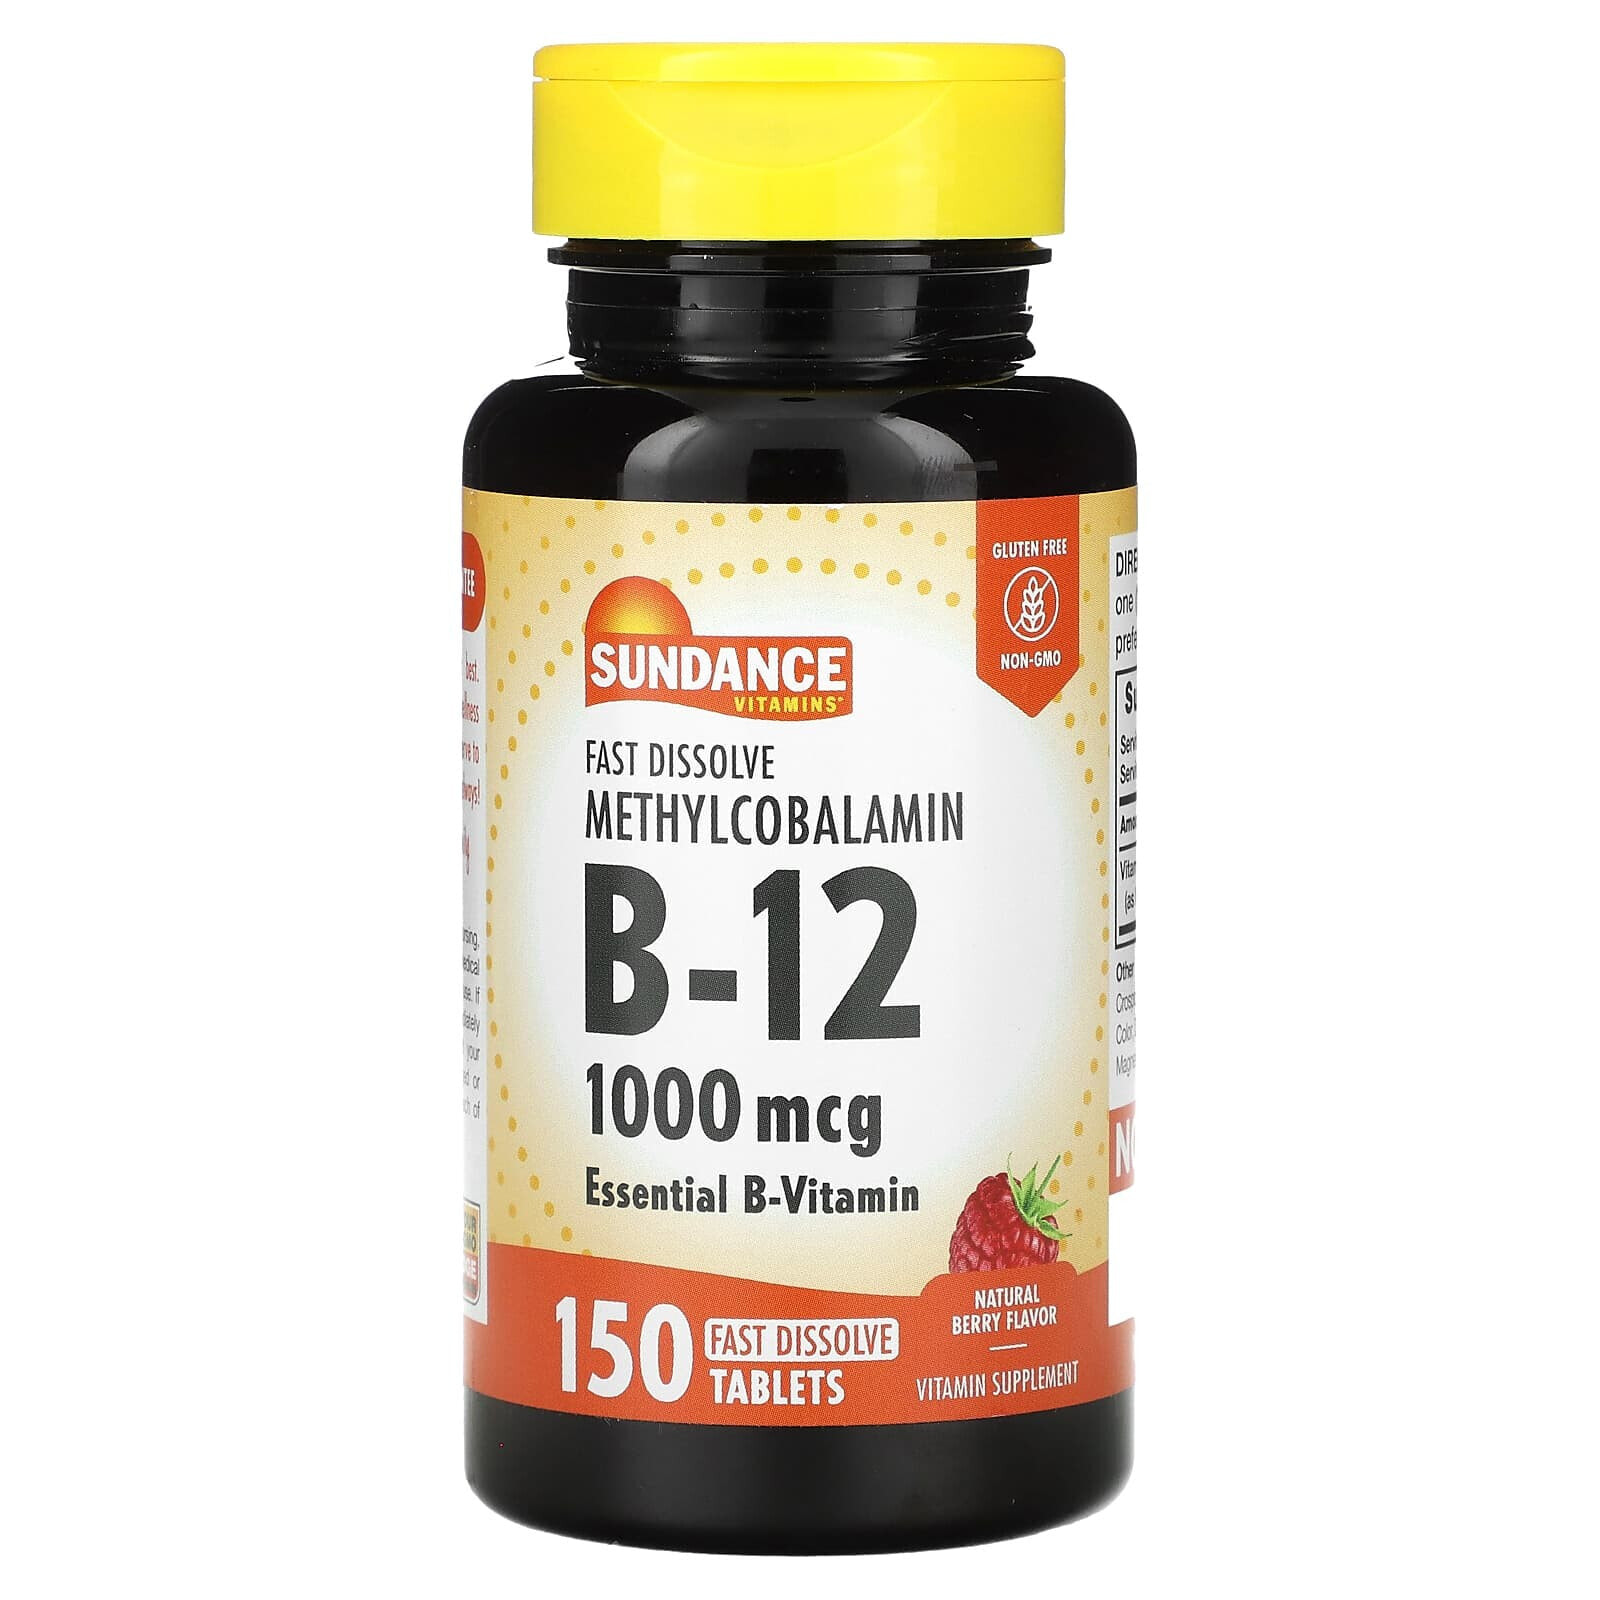 Sundance, Vitamin B-12, Natural Berry, 1,000 mcg, 150 Fast Dissolve Tablets